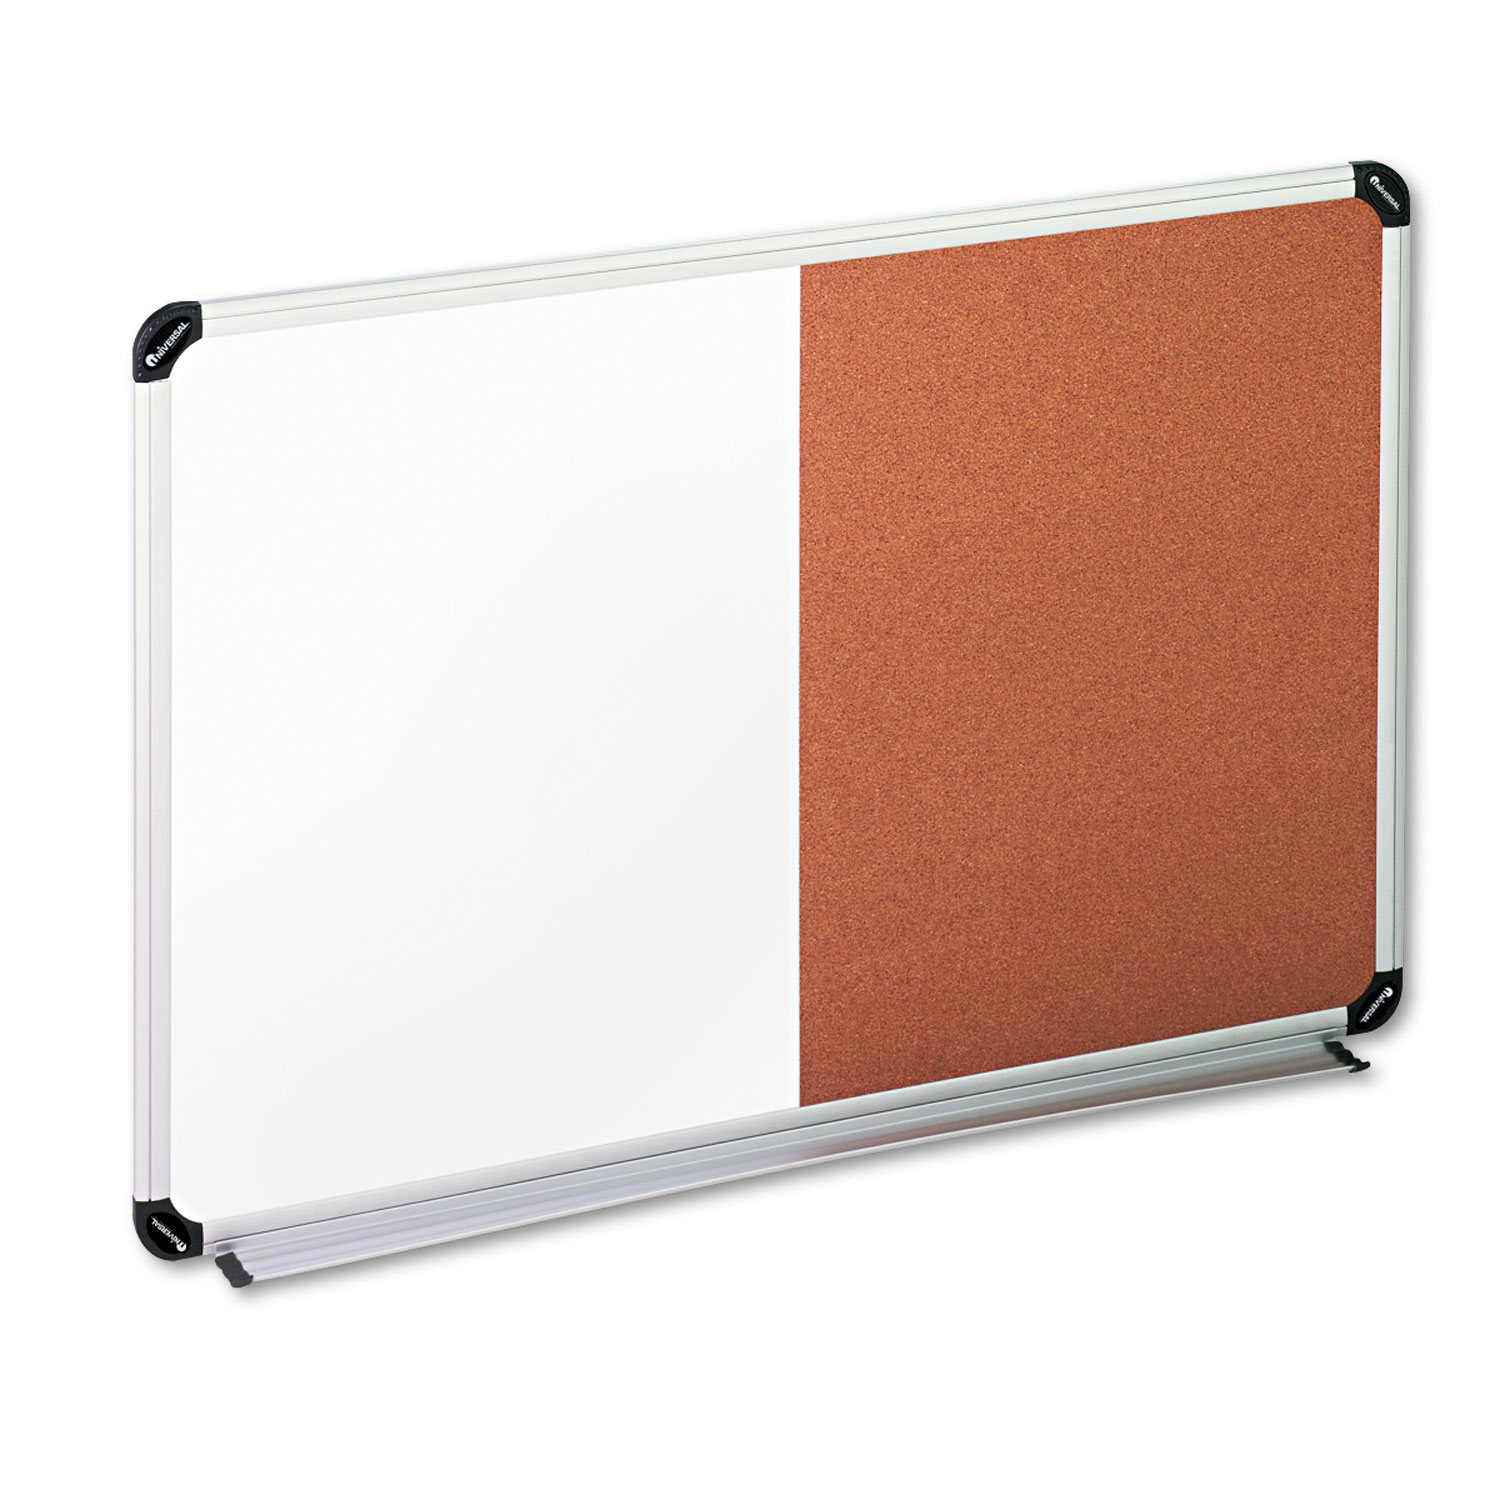  Universal UNV43743 Cork/Dry Erase Board, Melamine, 36 x 24, Black/Gray, Aluminum/Plastic Frame (UNV43743) 